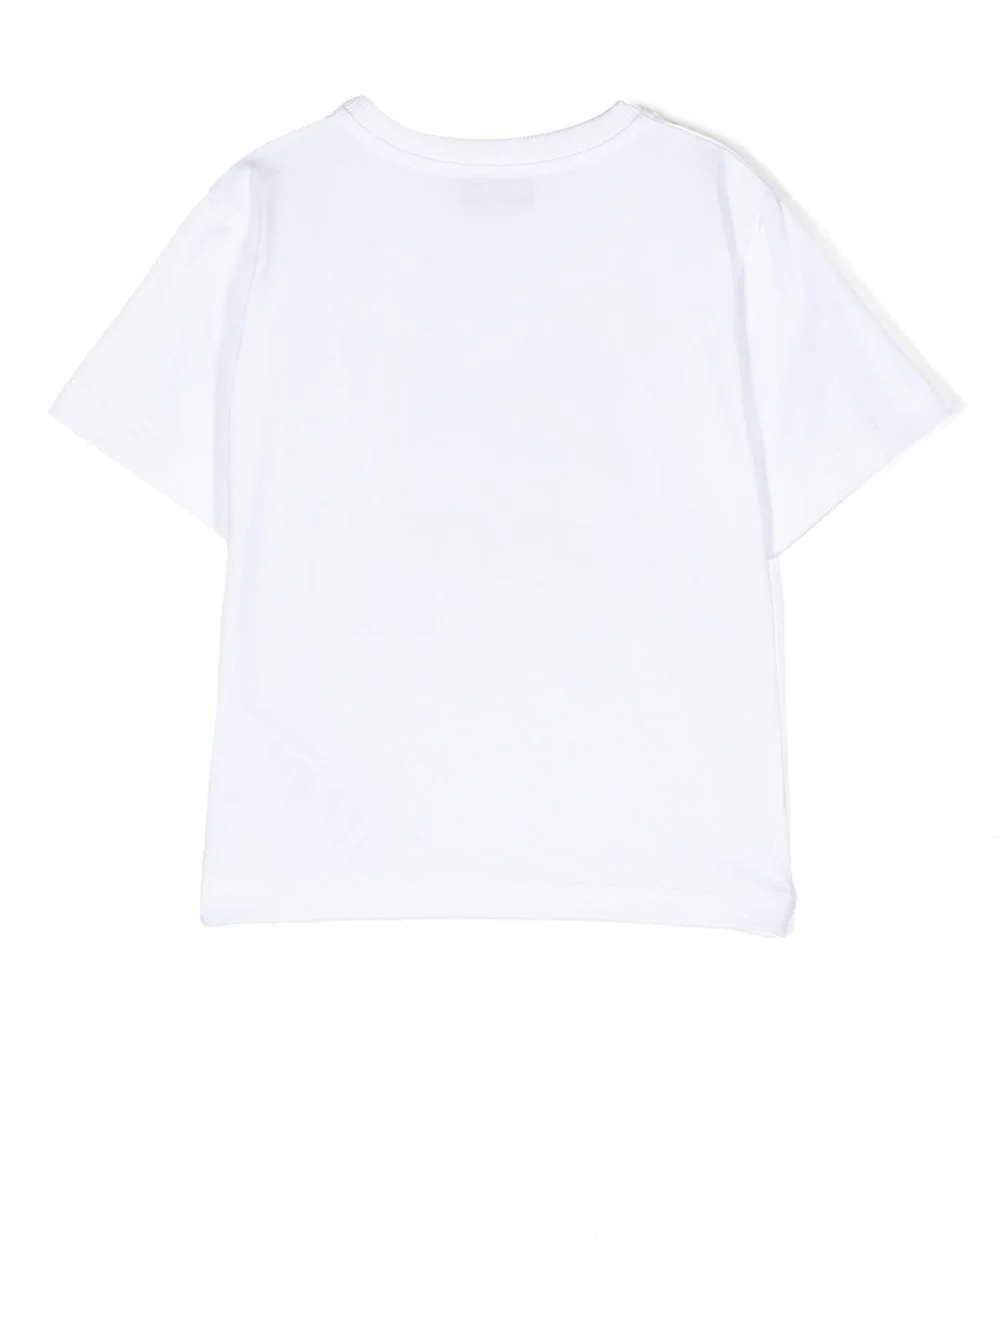 moschino HDM050 t shirt 10101 white retro